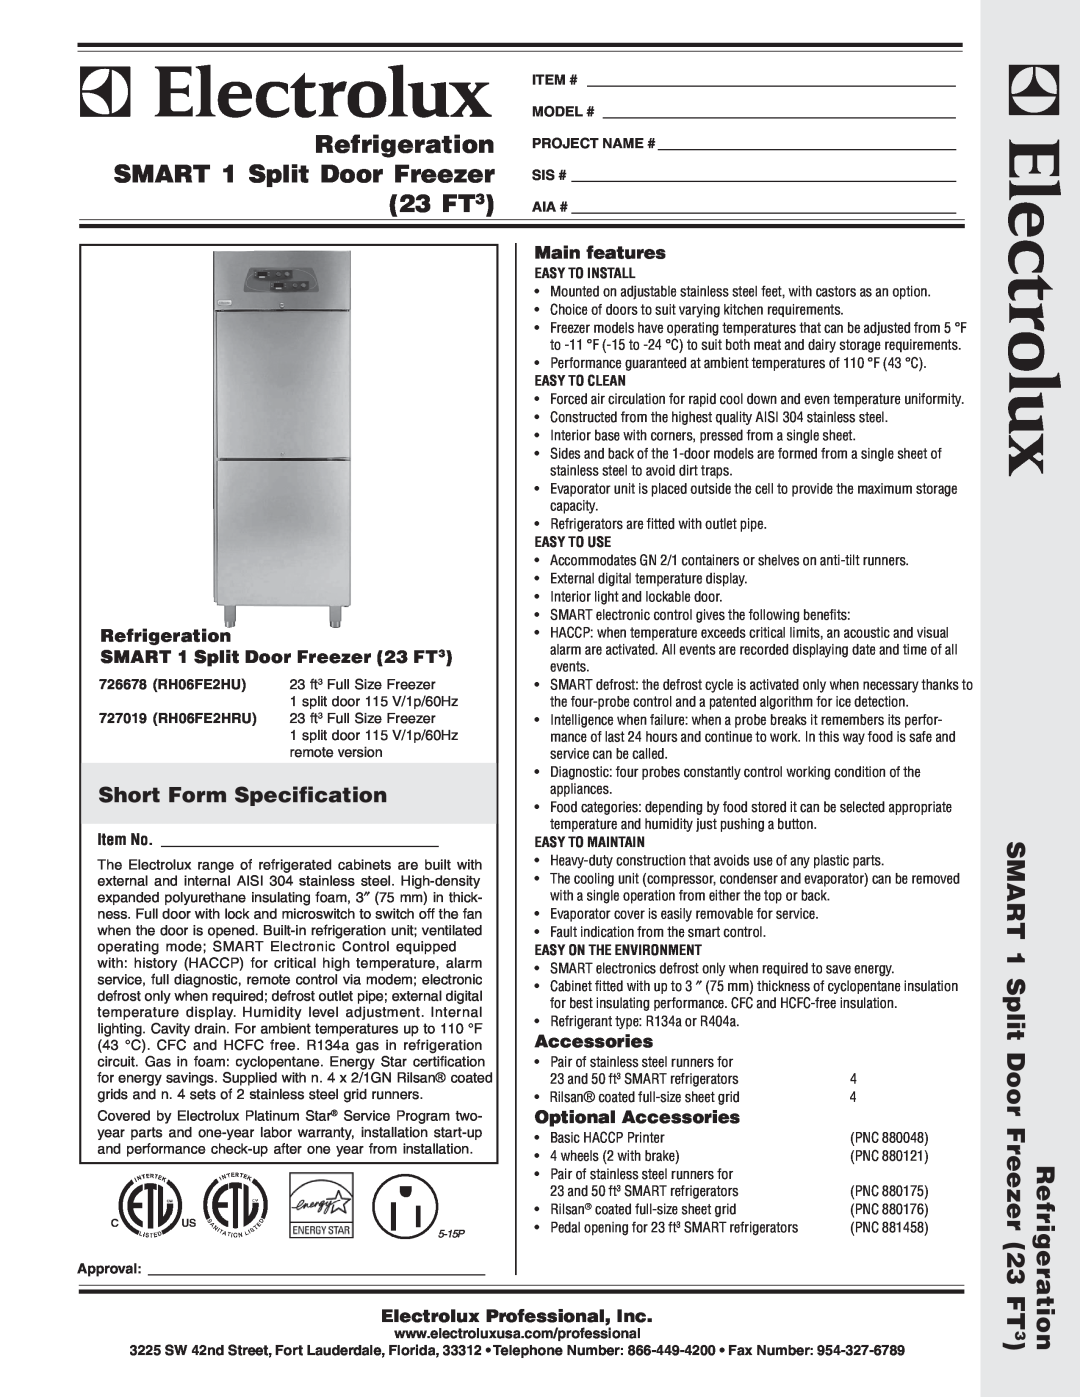 Electrolux RH06FE2HRU warranty Short Form Specification, Main features, Refrigeration, SMART 1 Split Door Freezer 23 FT3 